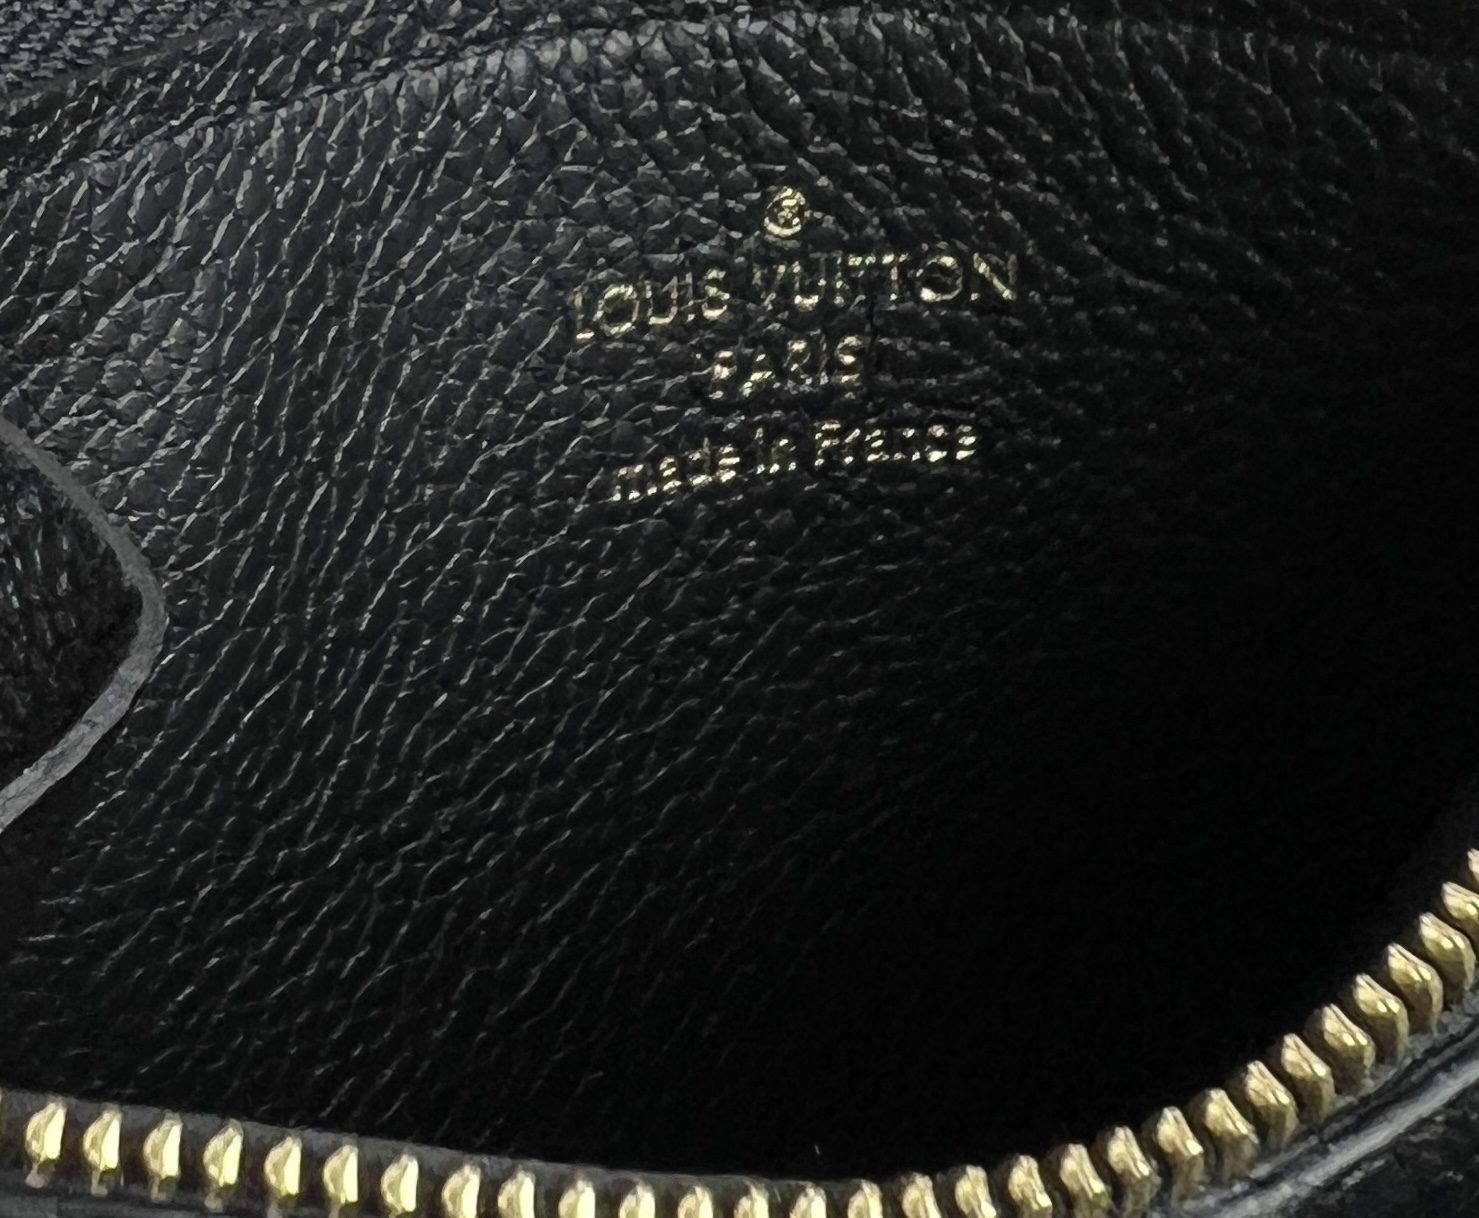 Does Louis Vuitton Have Authenticity Card